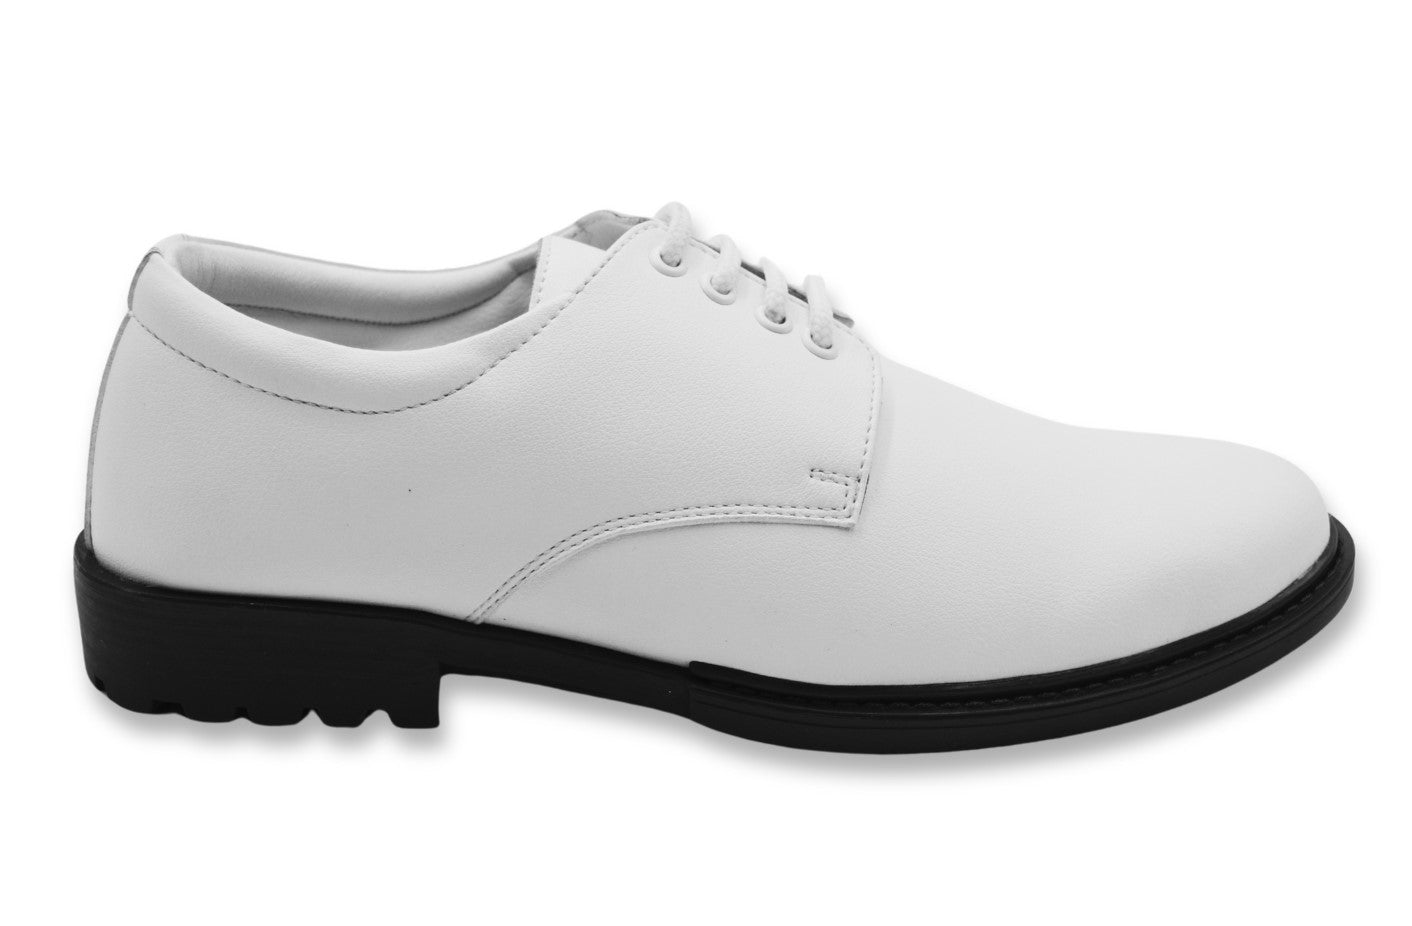 Shoes PU-coated Microfiber White Uniform